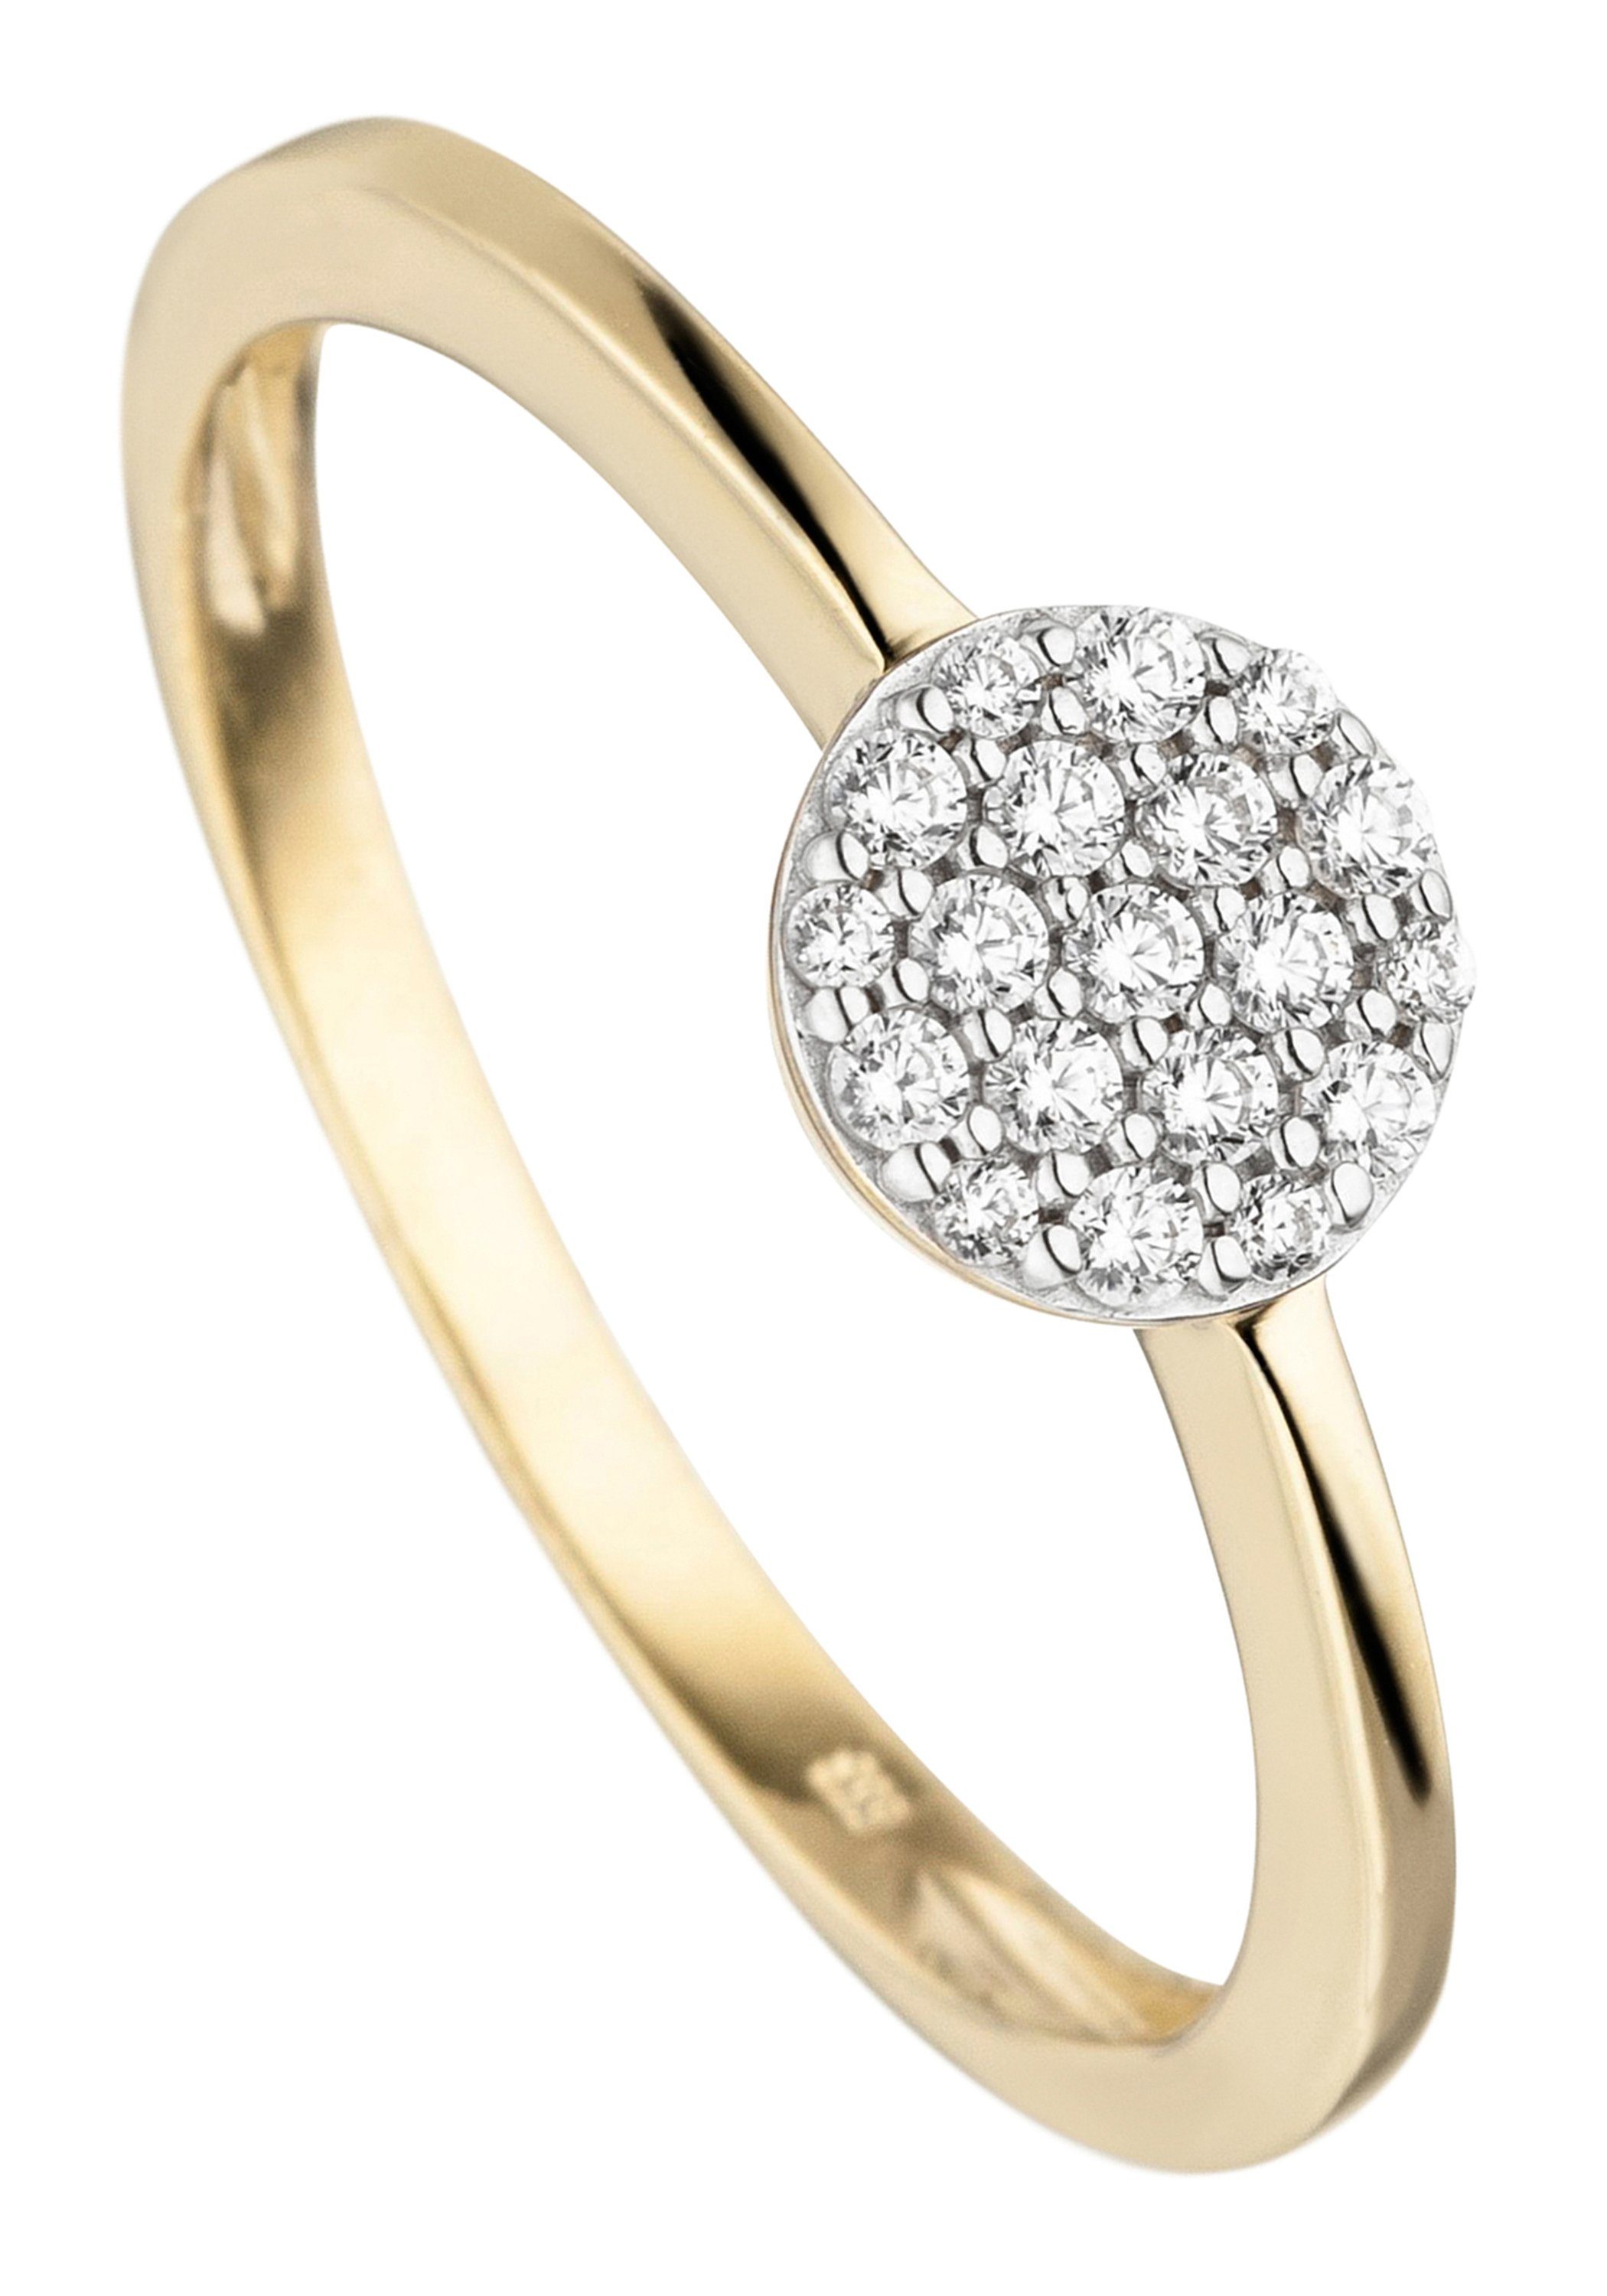 JOBO Fingerring Ring mit 19 Zirkonia, 333 Gold bicolor